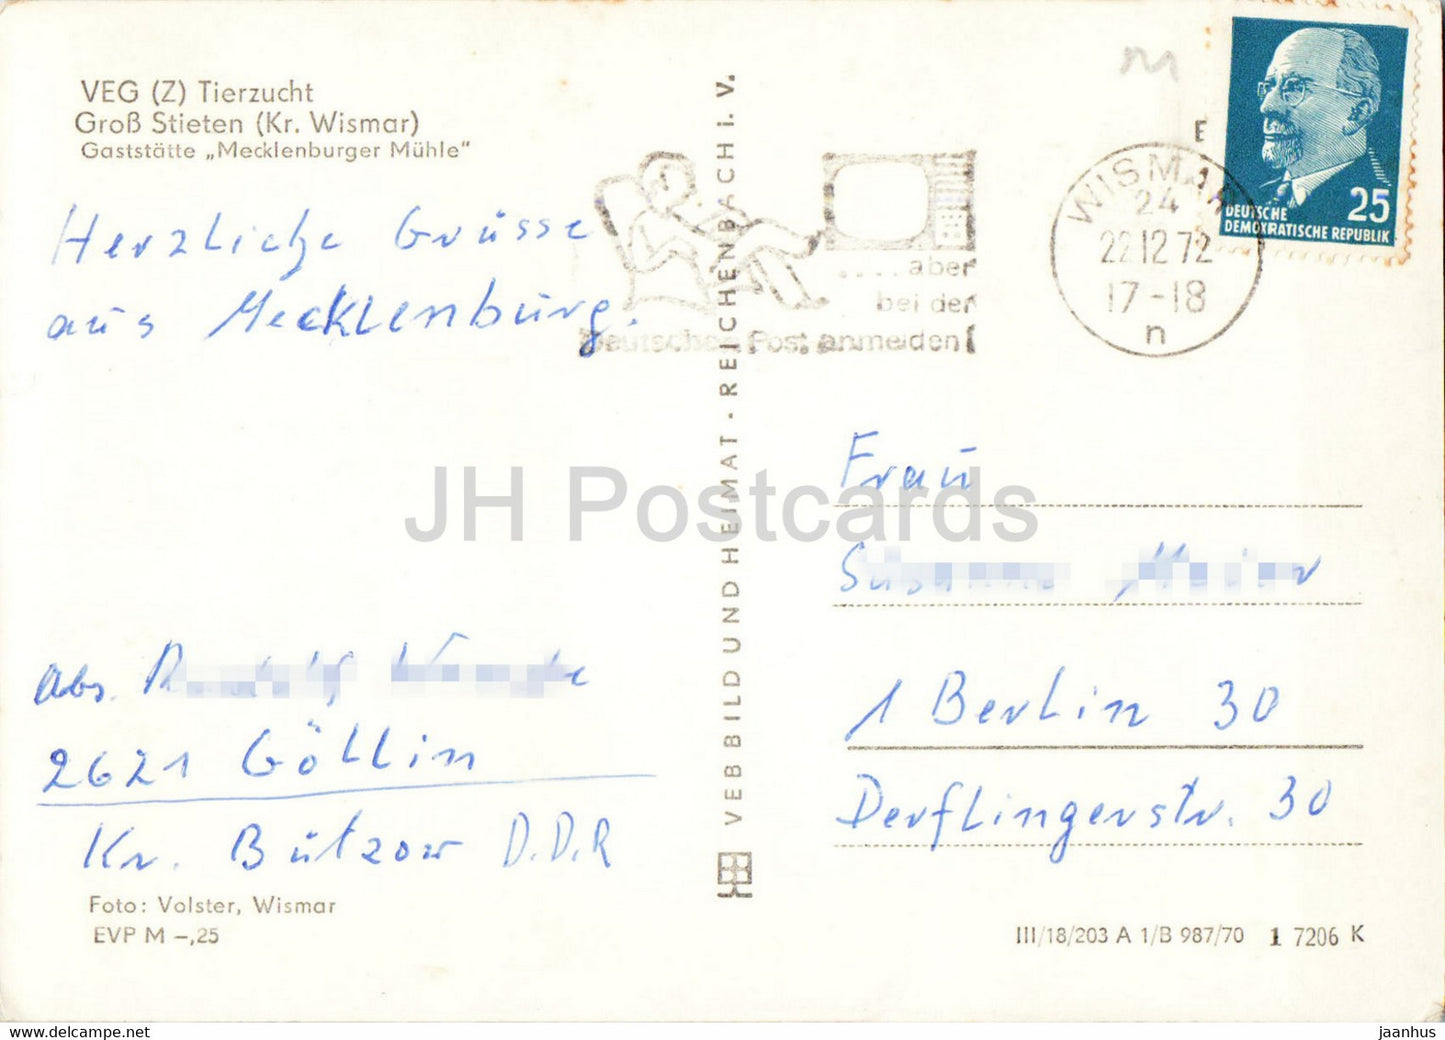 VEG Tierzucht - Gross Stieten - Gaststatte Mecklenburger Muhle - windmill - old postcard - 1972 - Germany DDR - used